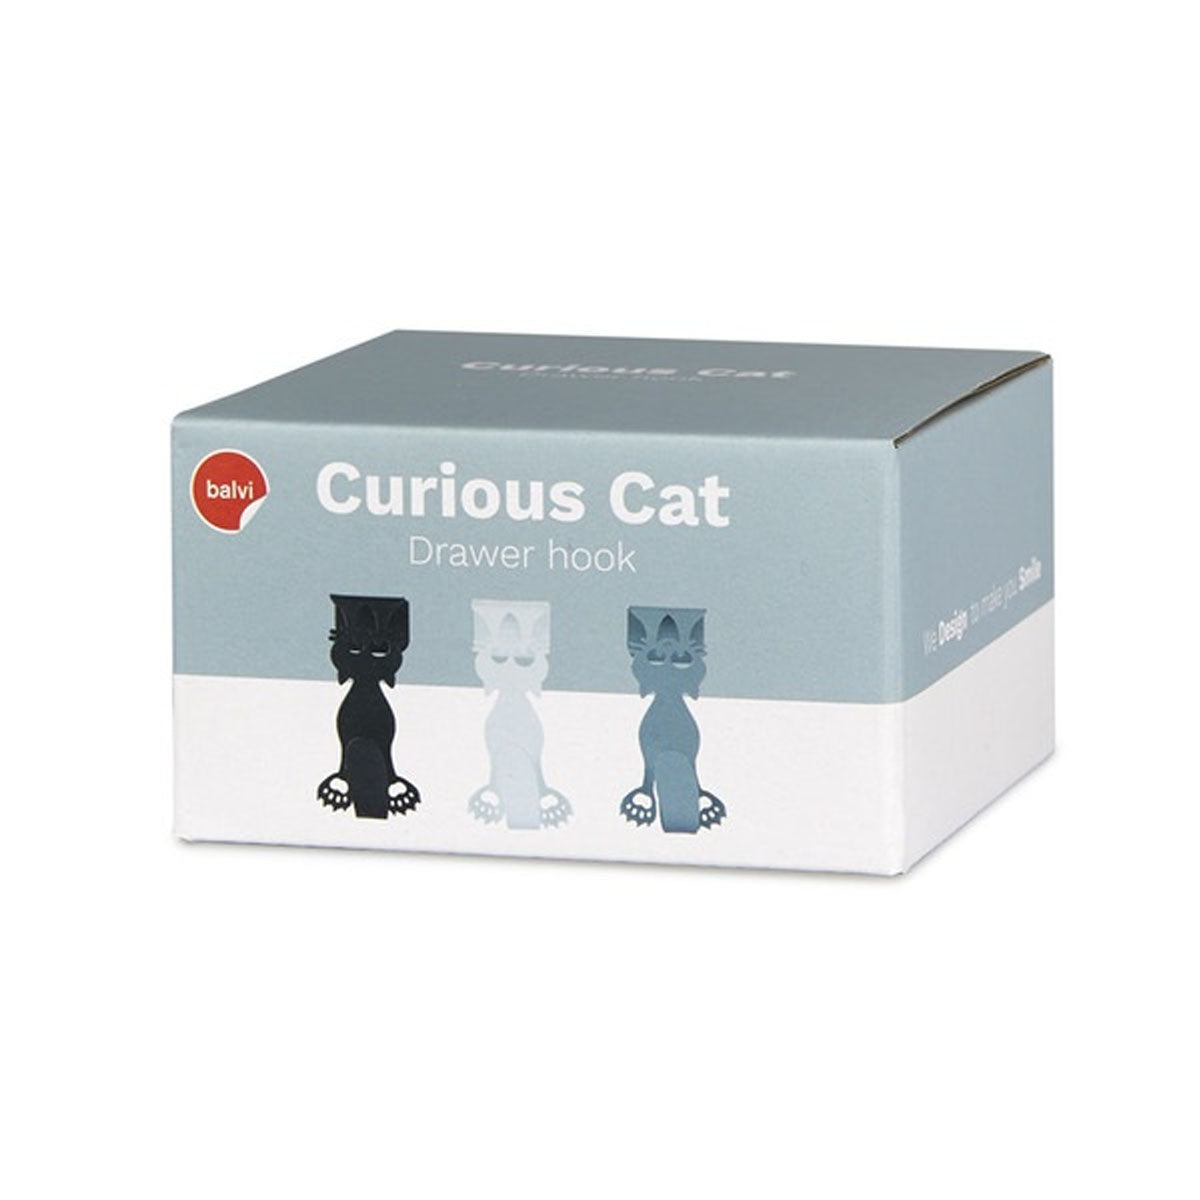 Colgador Cajón Curious Cat Set De 3 Piezas BALVI